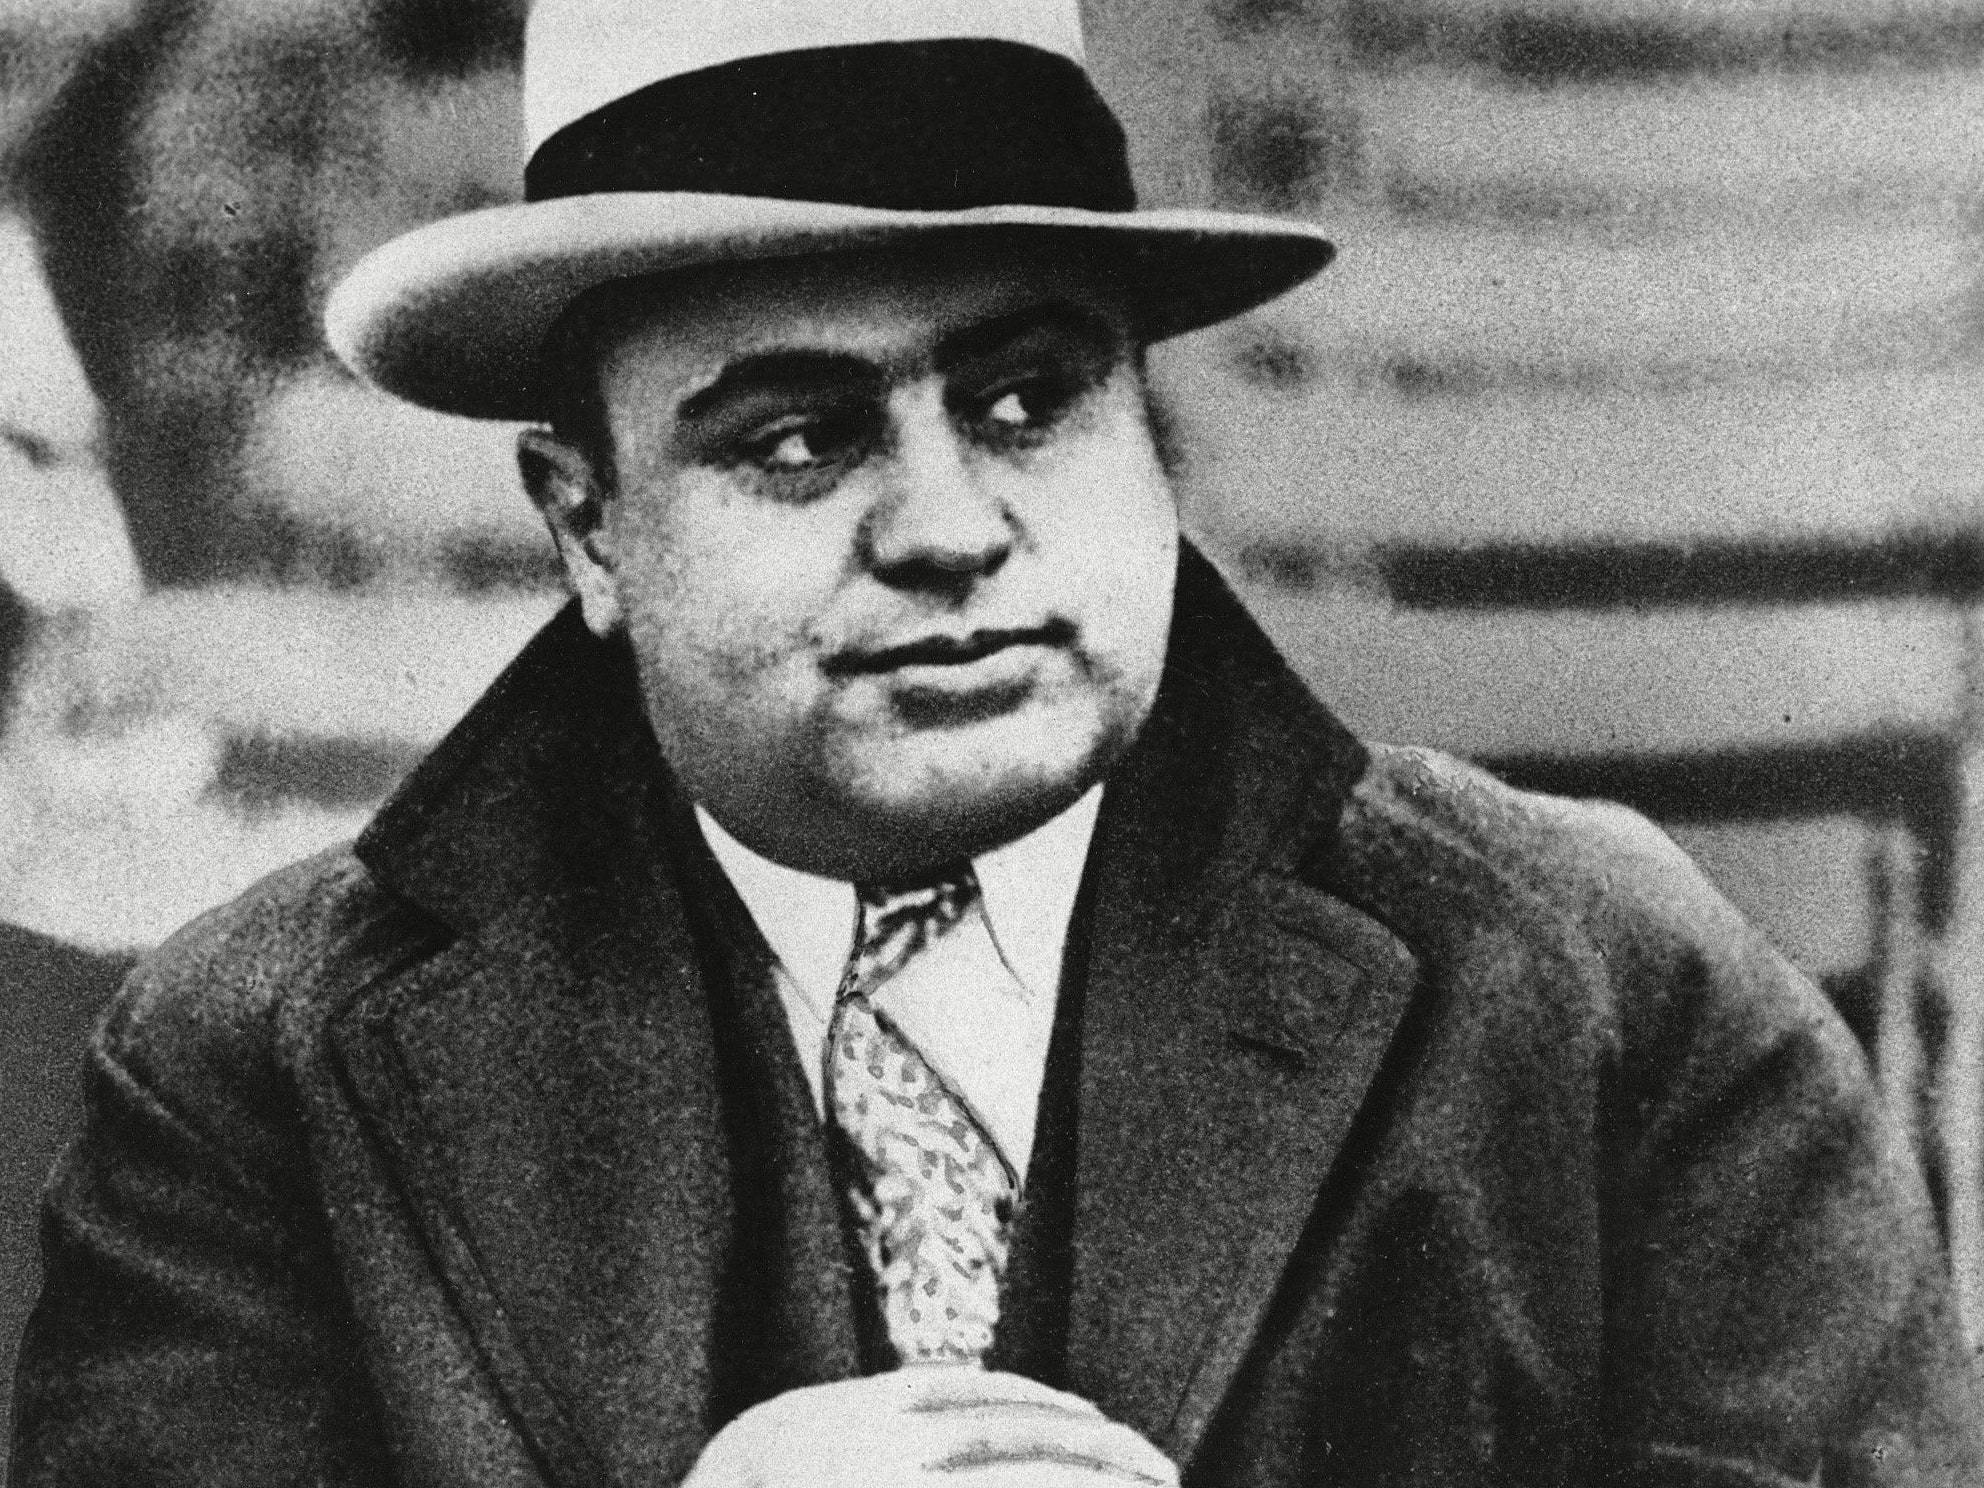 Al Capone. Cel mai mare gangster din istoria Americii